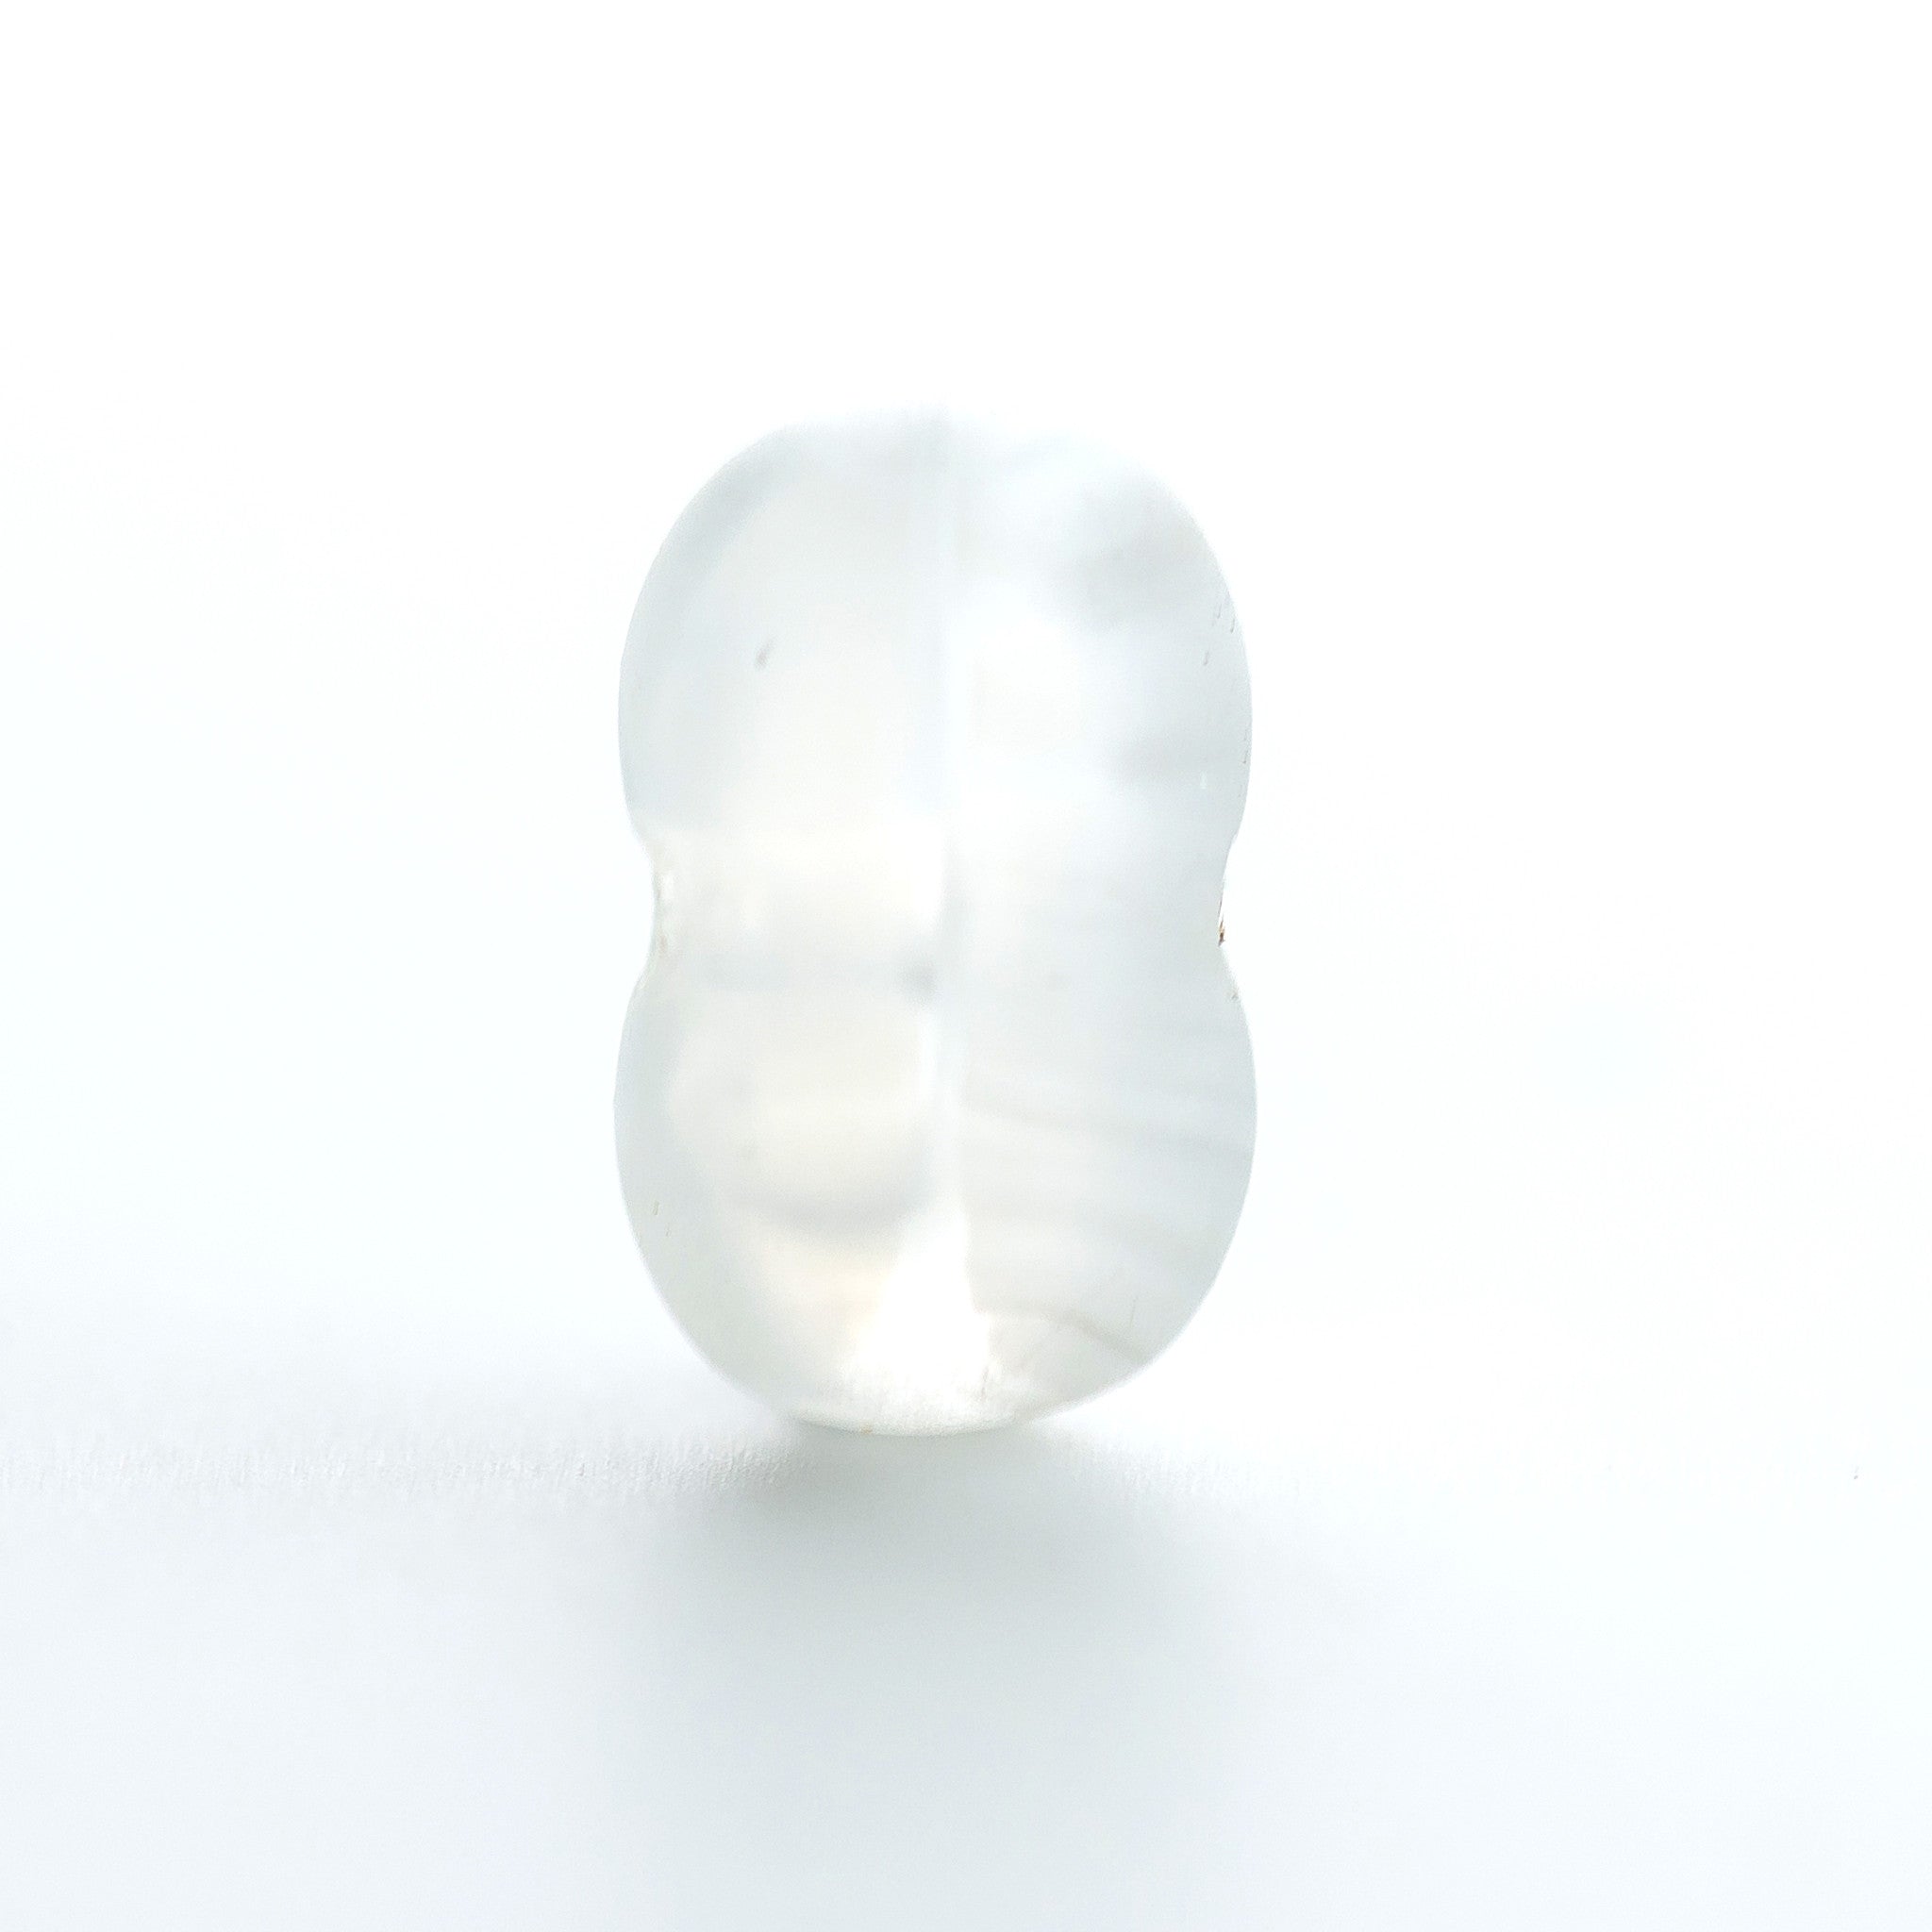 7X4MM White Quartz Glass Bead (144 pieces)